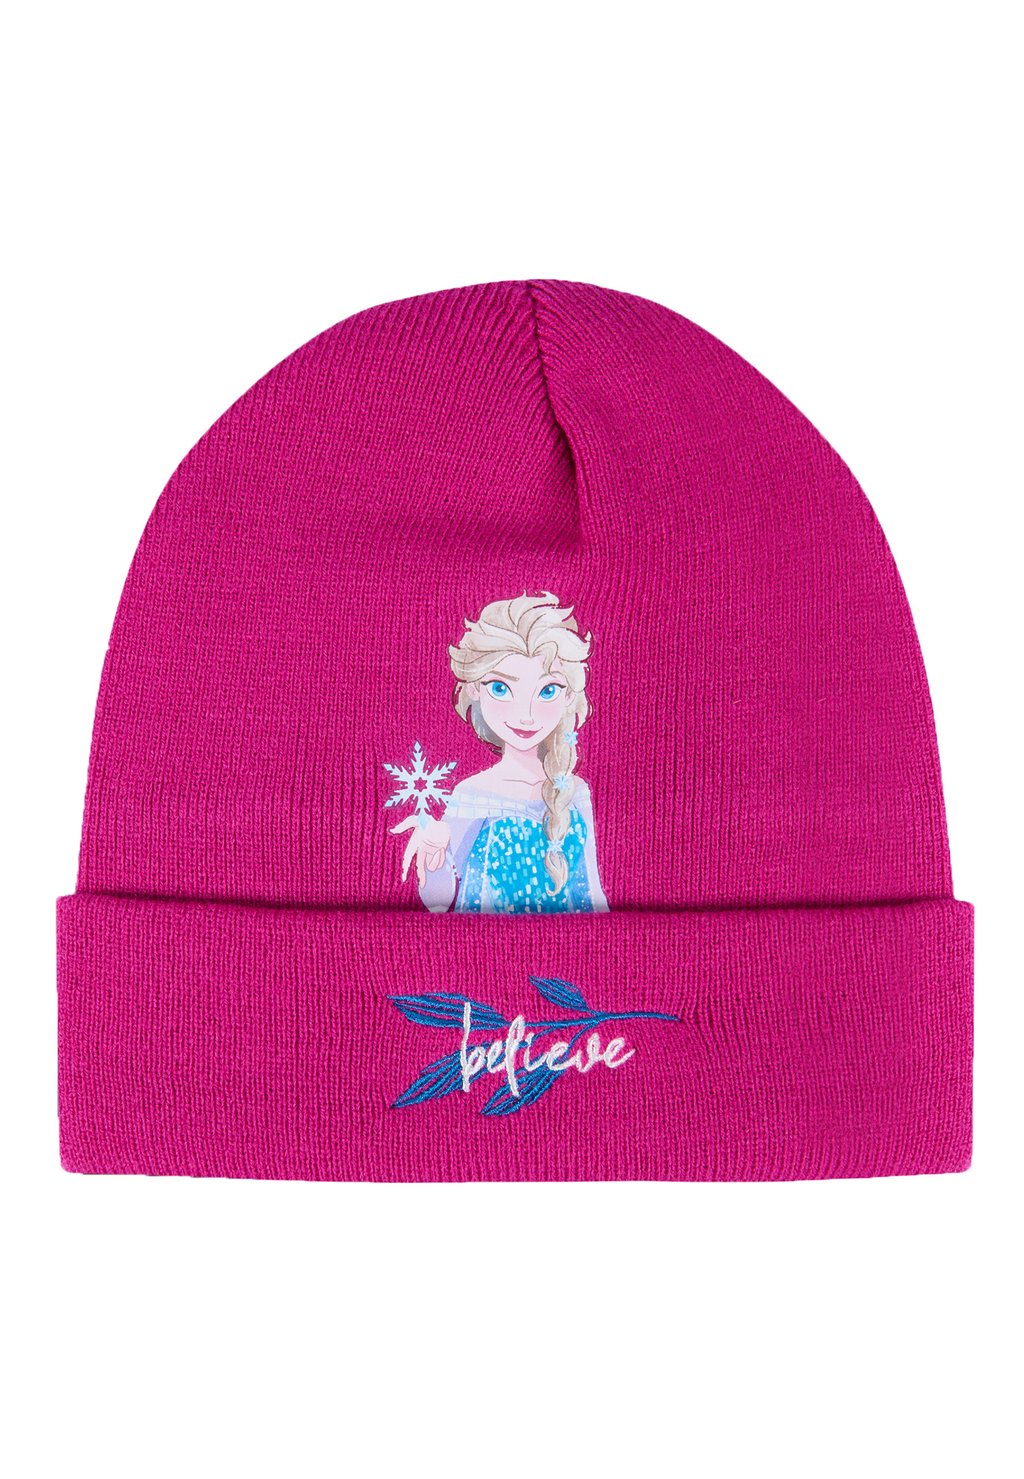 Шапка ANNA ELSA WINTER Disney FROZEN, цвет pink шапка elsa winter disney frozen цвет blau